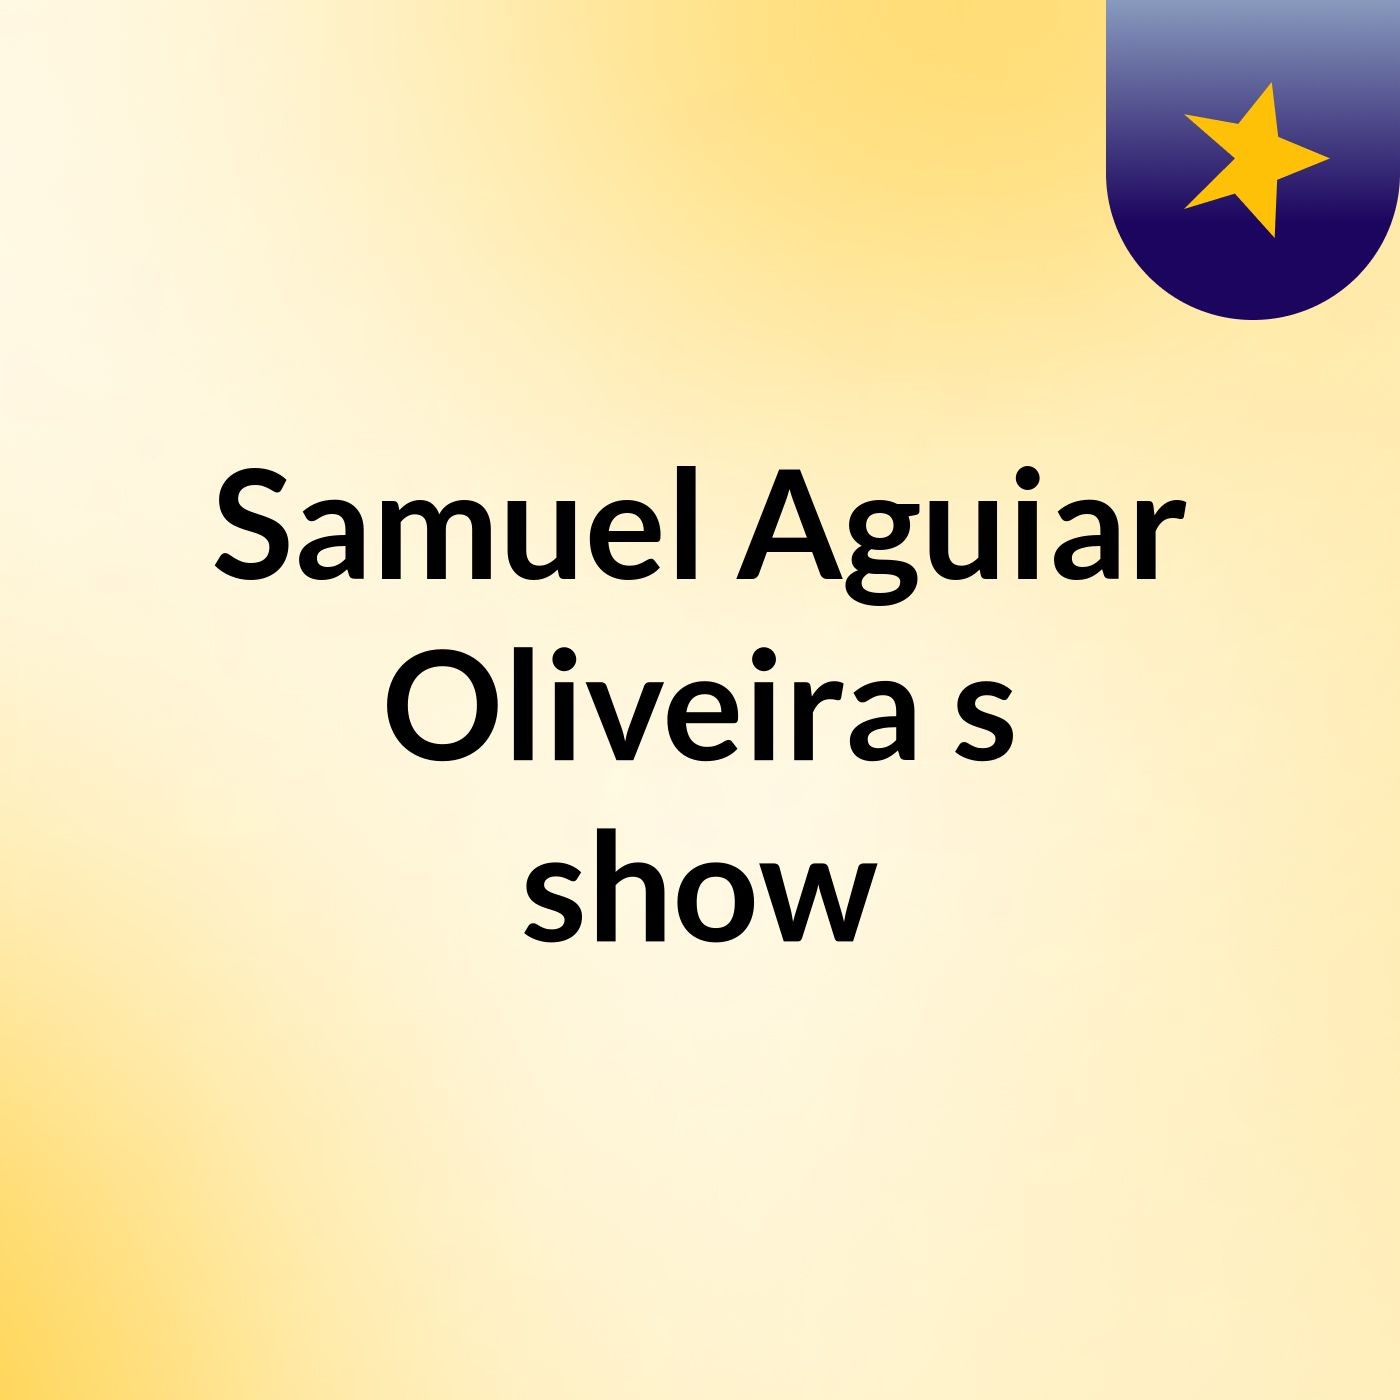 Samuel Aguiar Oliveira's show